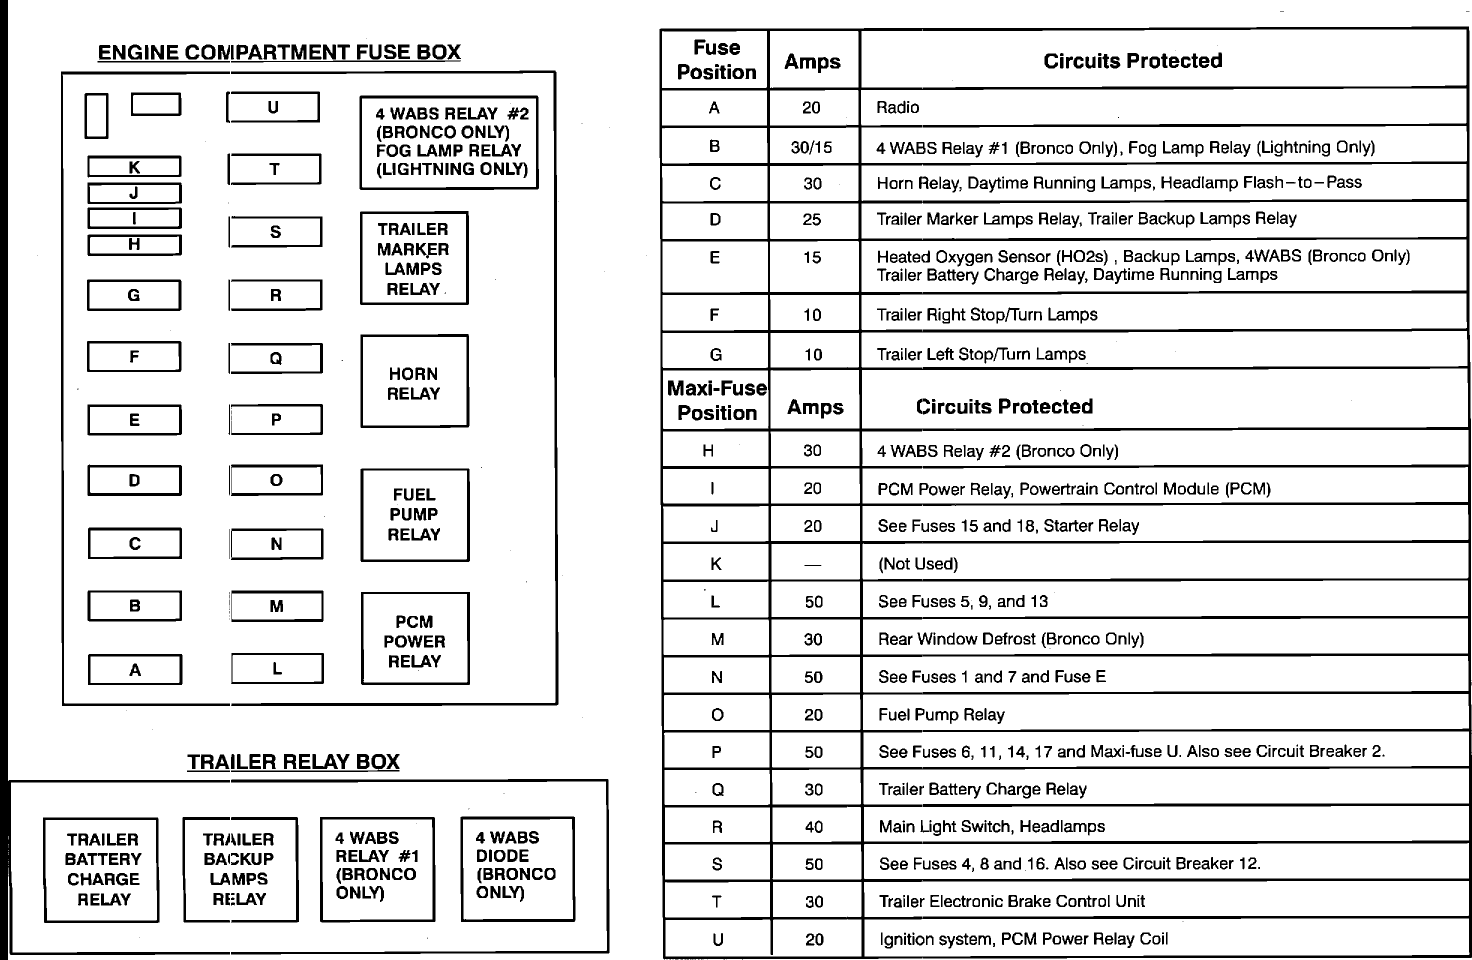 1994 Ford F150 Fuse Box Diagram